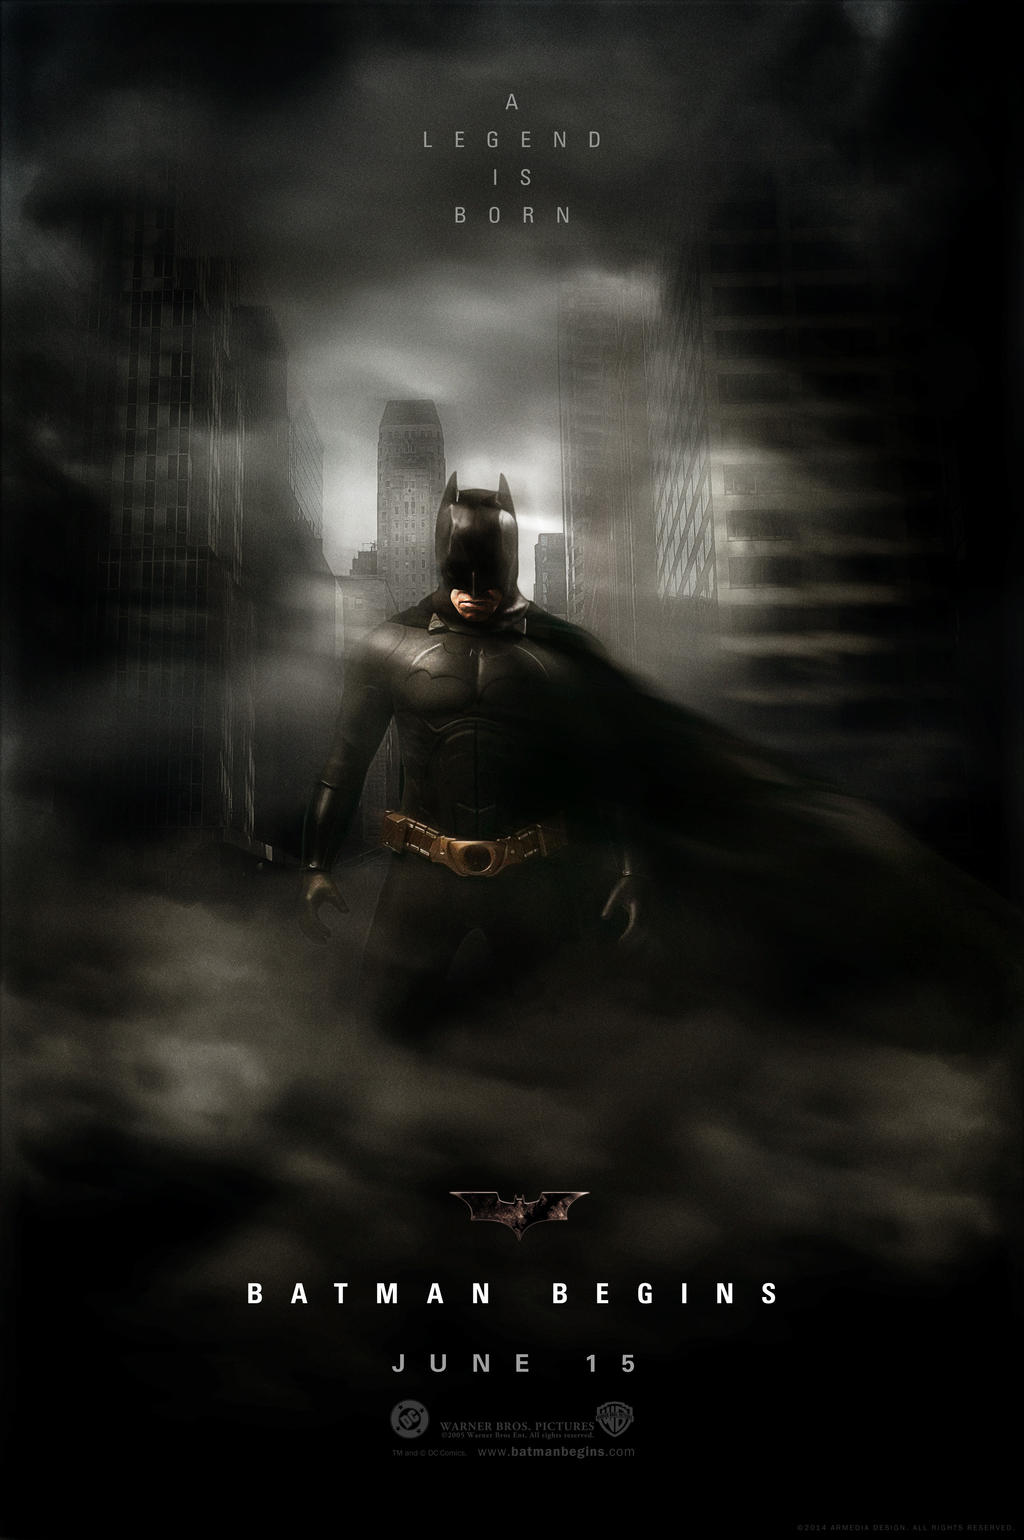 Batman Begins Movie Poster by altobello02 on DeviantArt